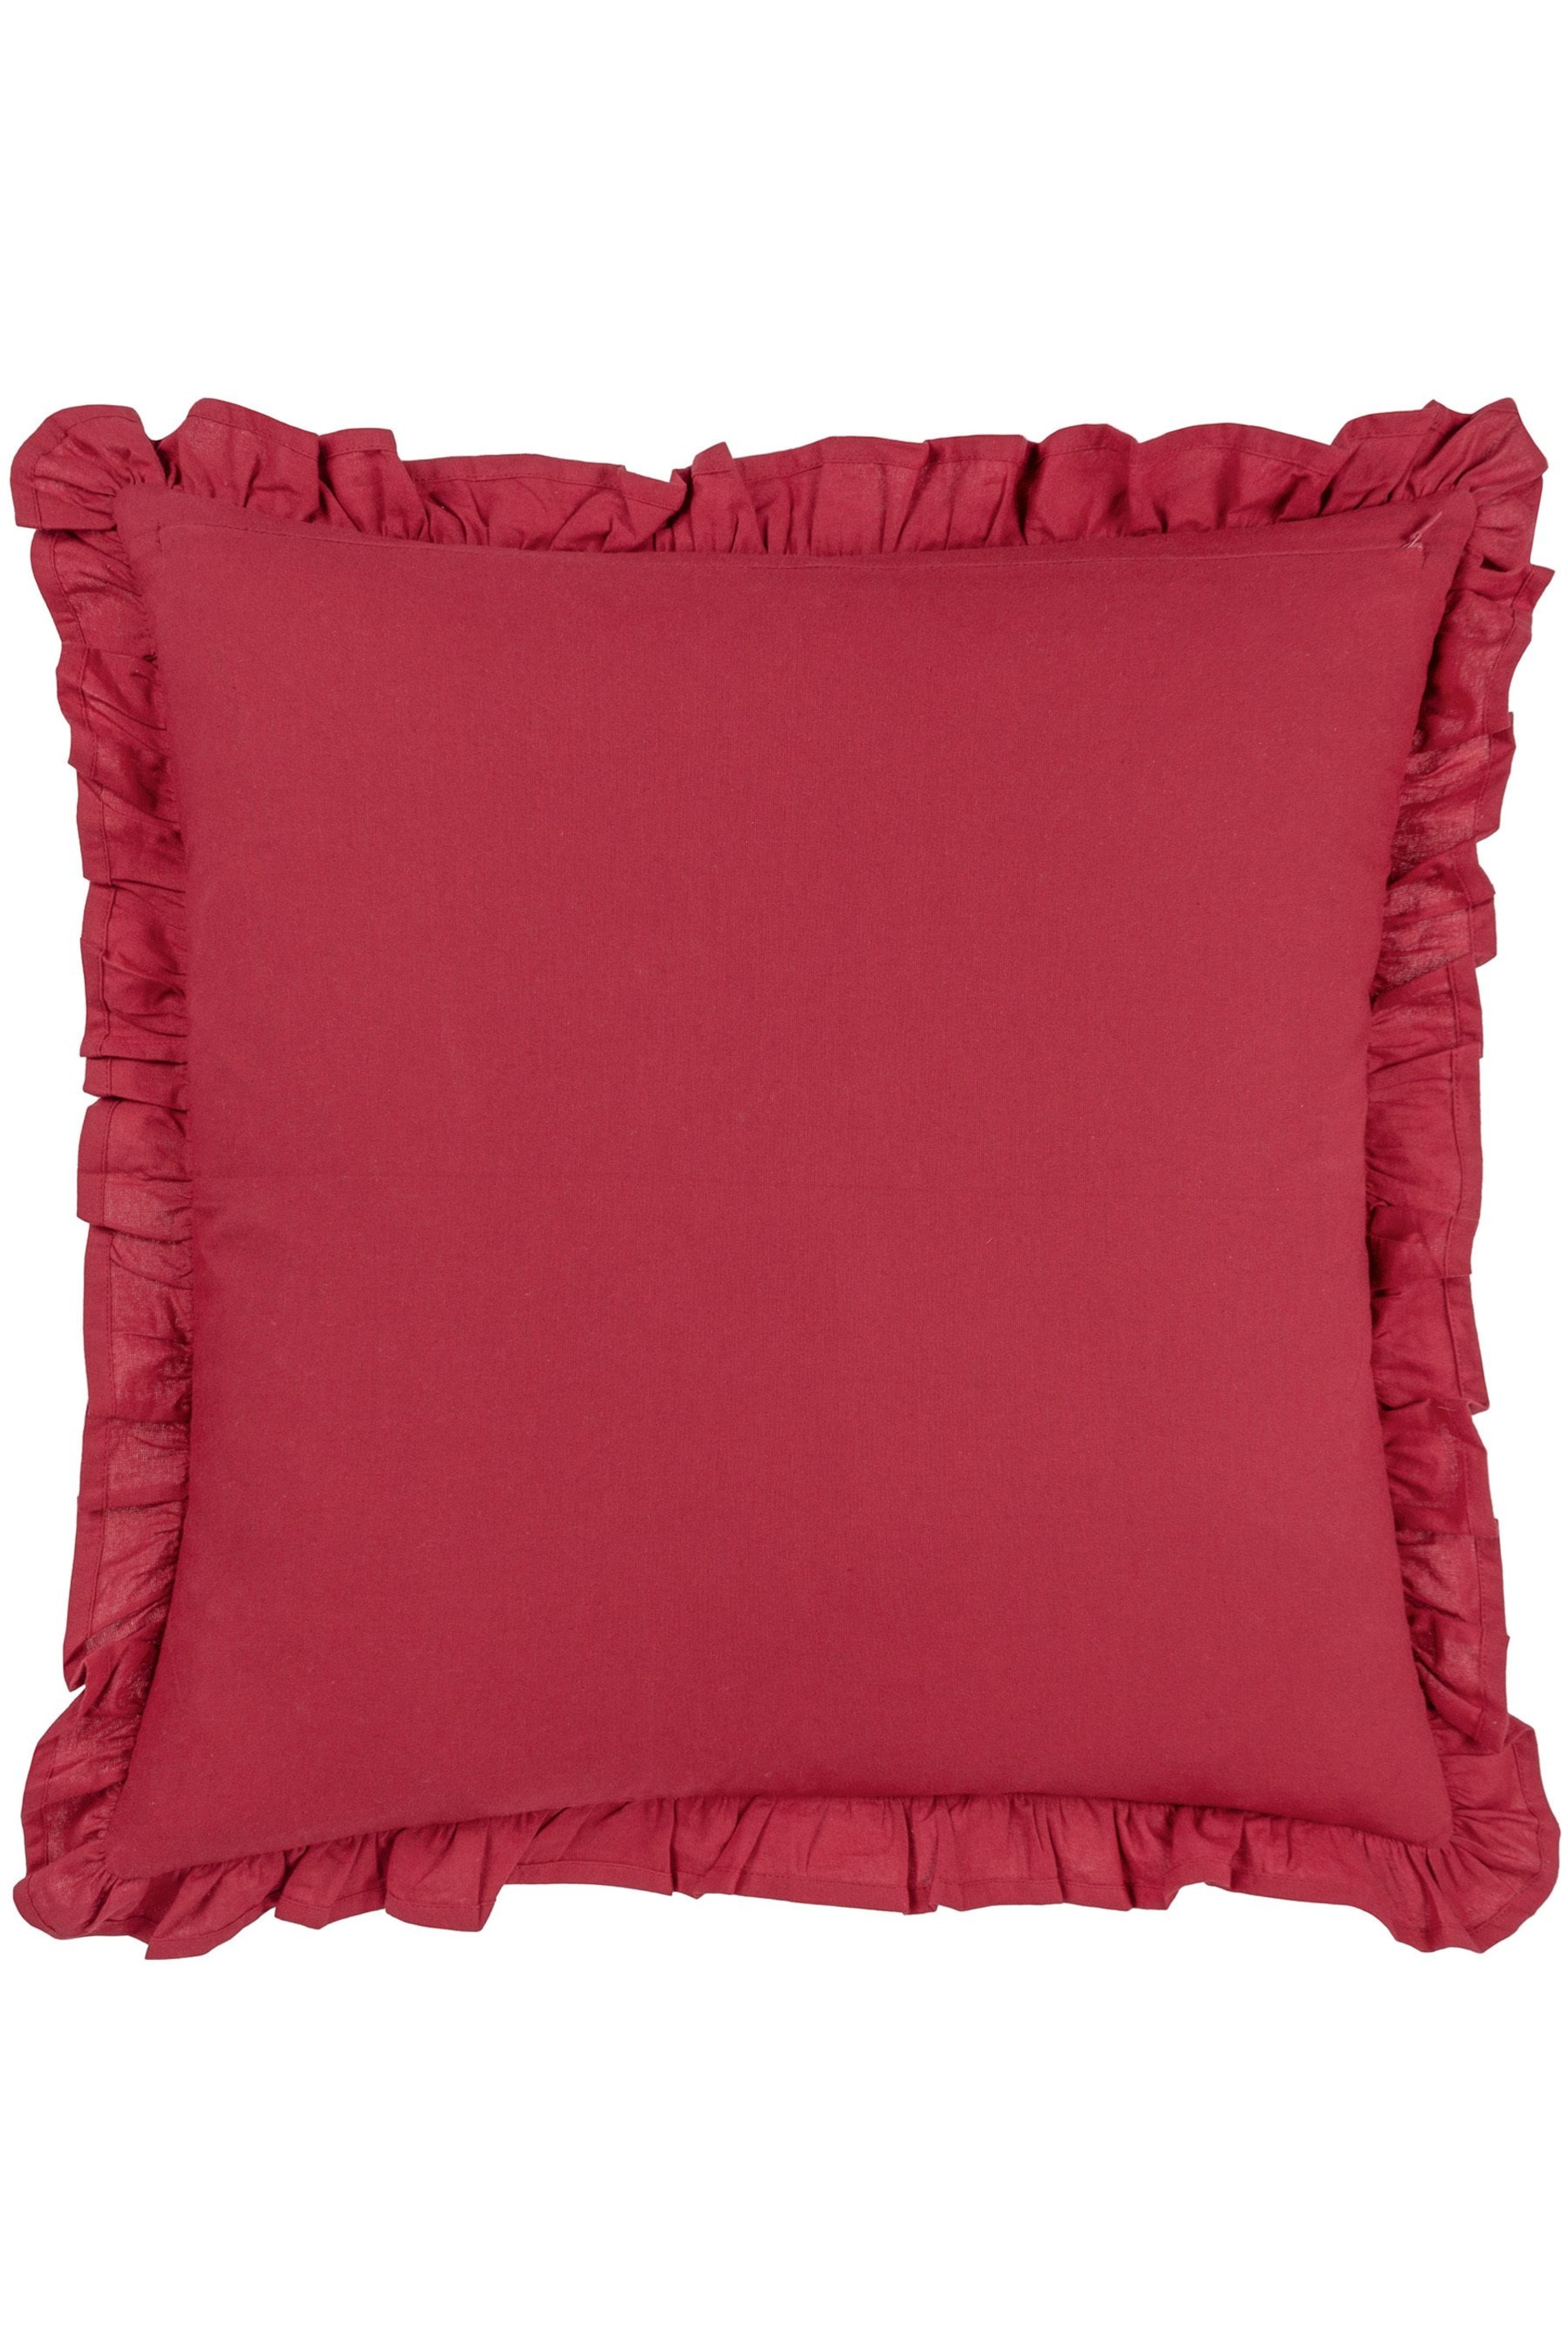 Riva Paoletti Redcurrant Kirkton Floral Tile Cotton Pleated Cushion - Image 4 of 7